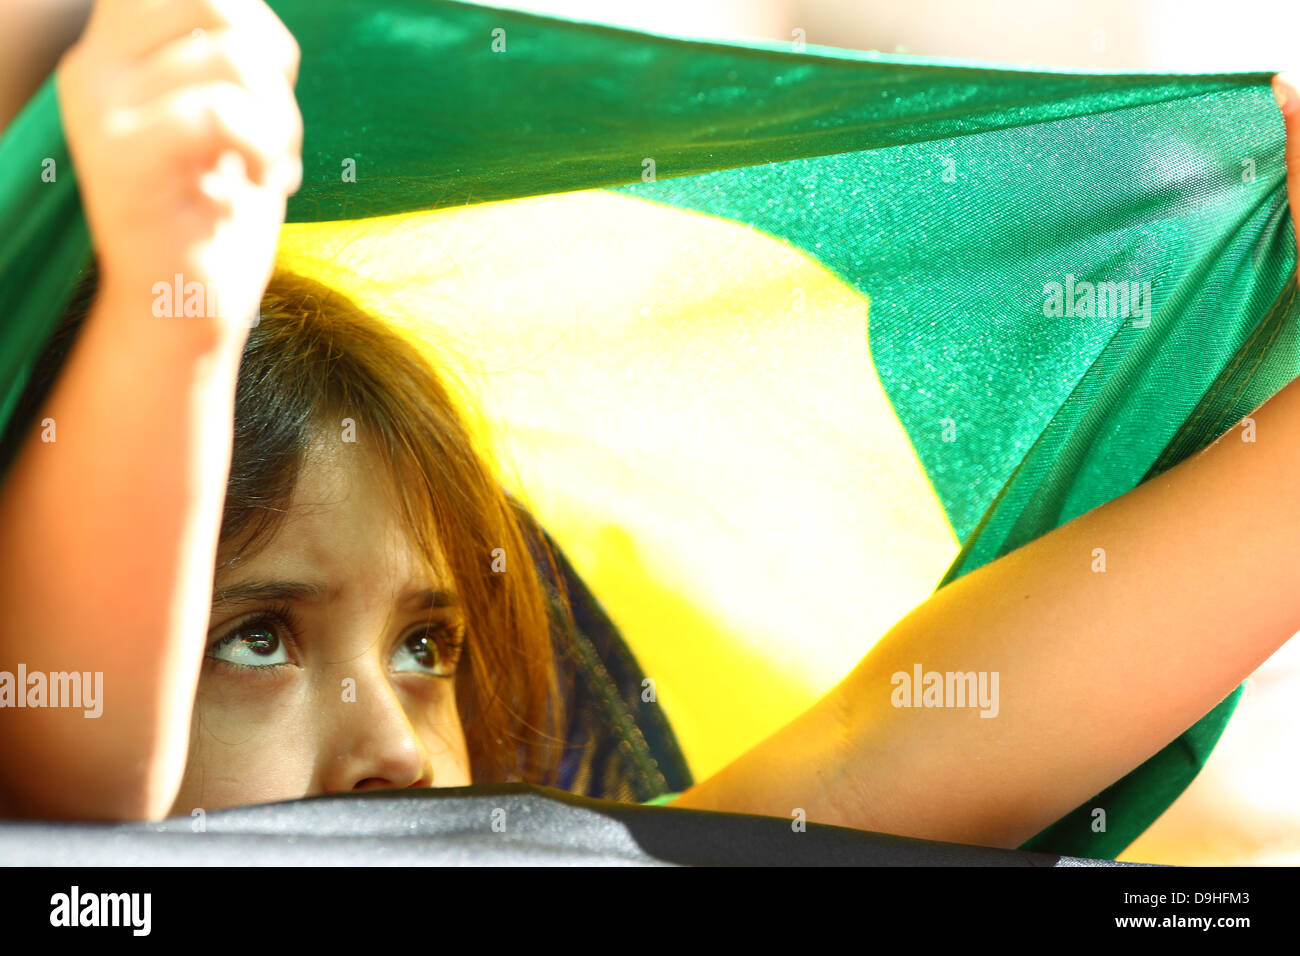 Belo Horizonte, Brazil. 28th June, 2014. Brazil kids fans (BRA